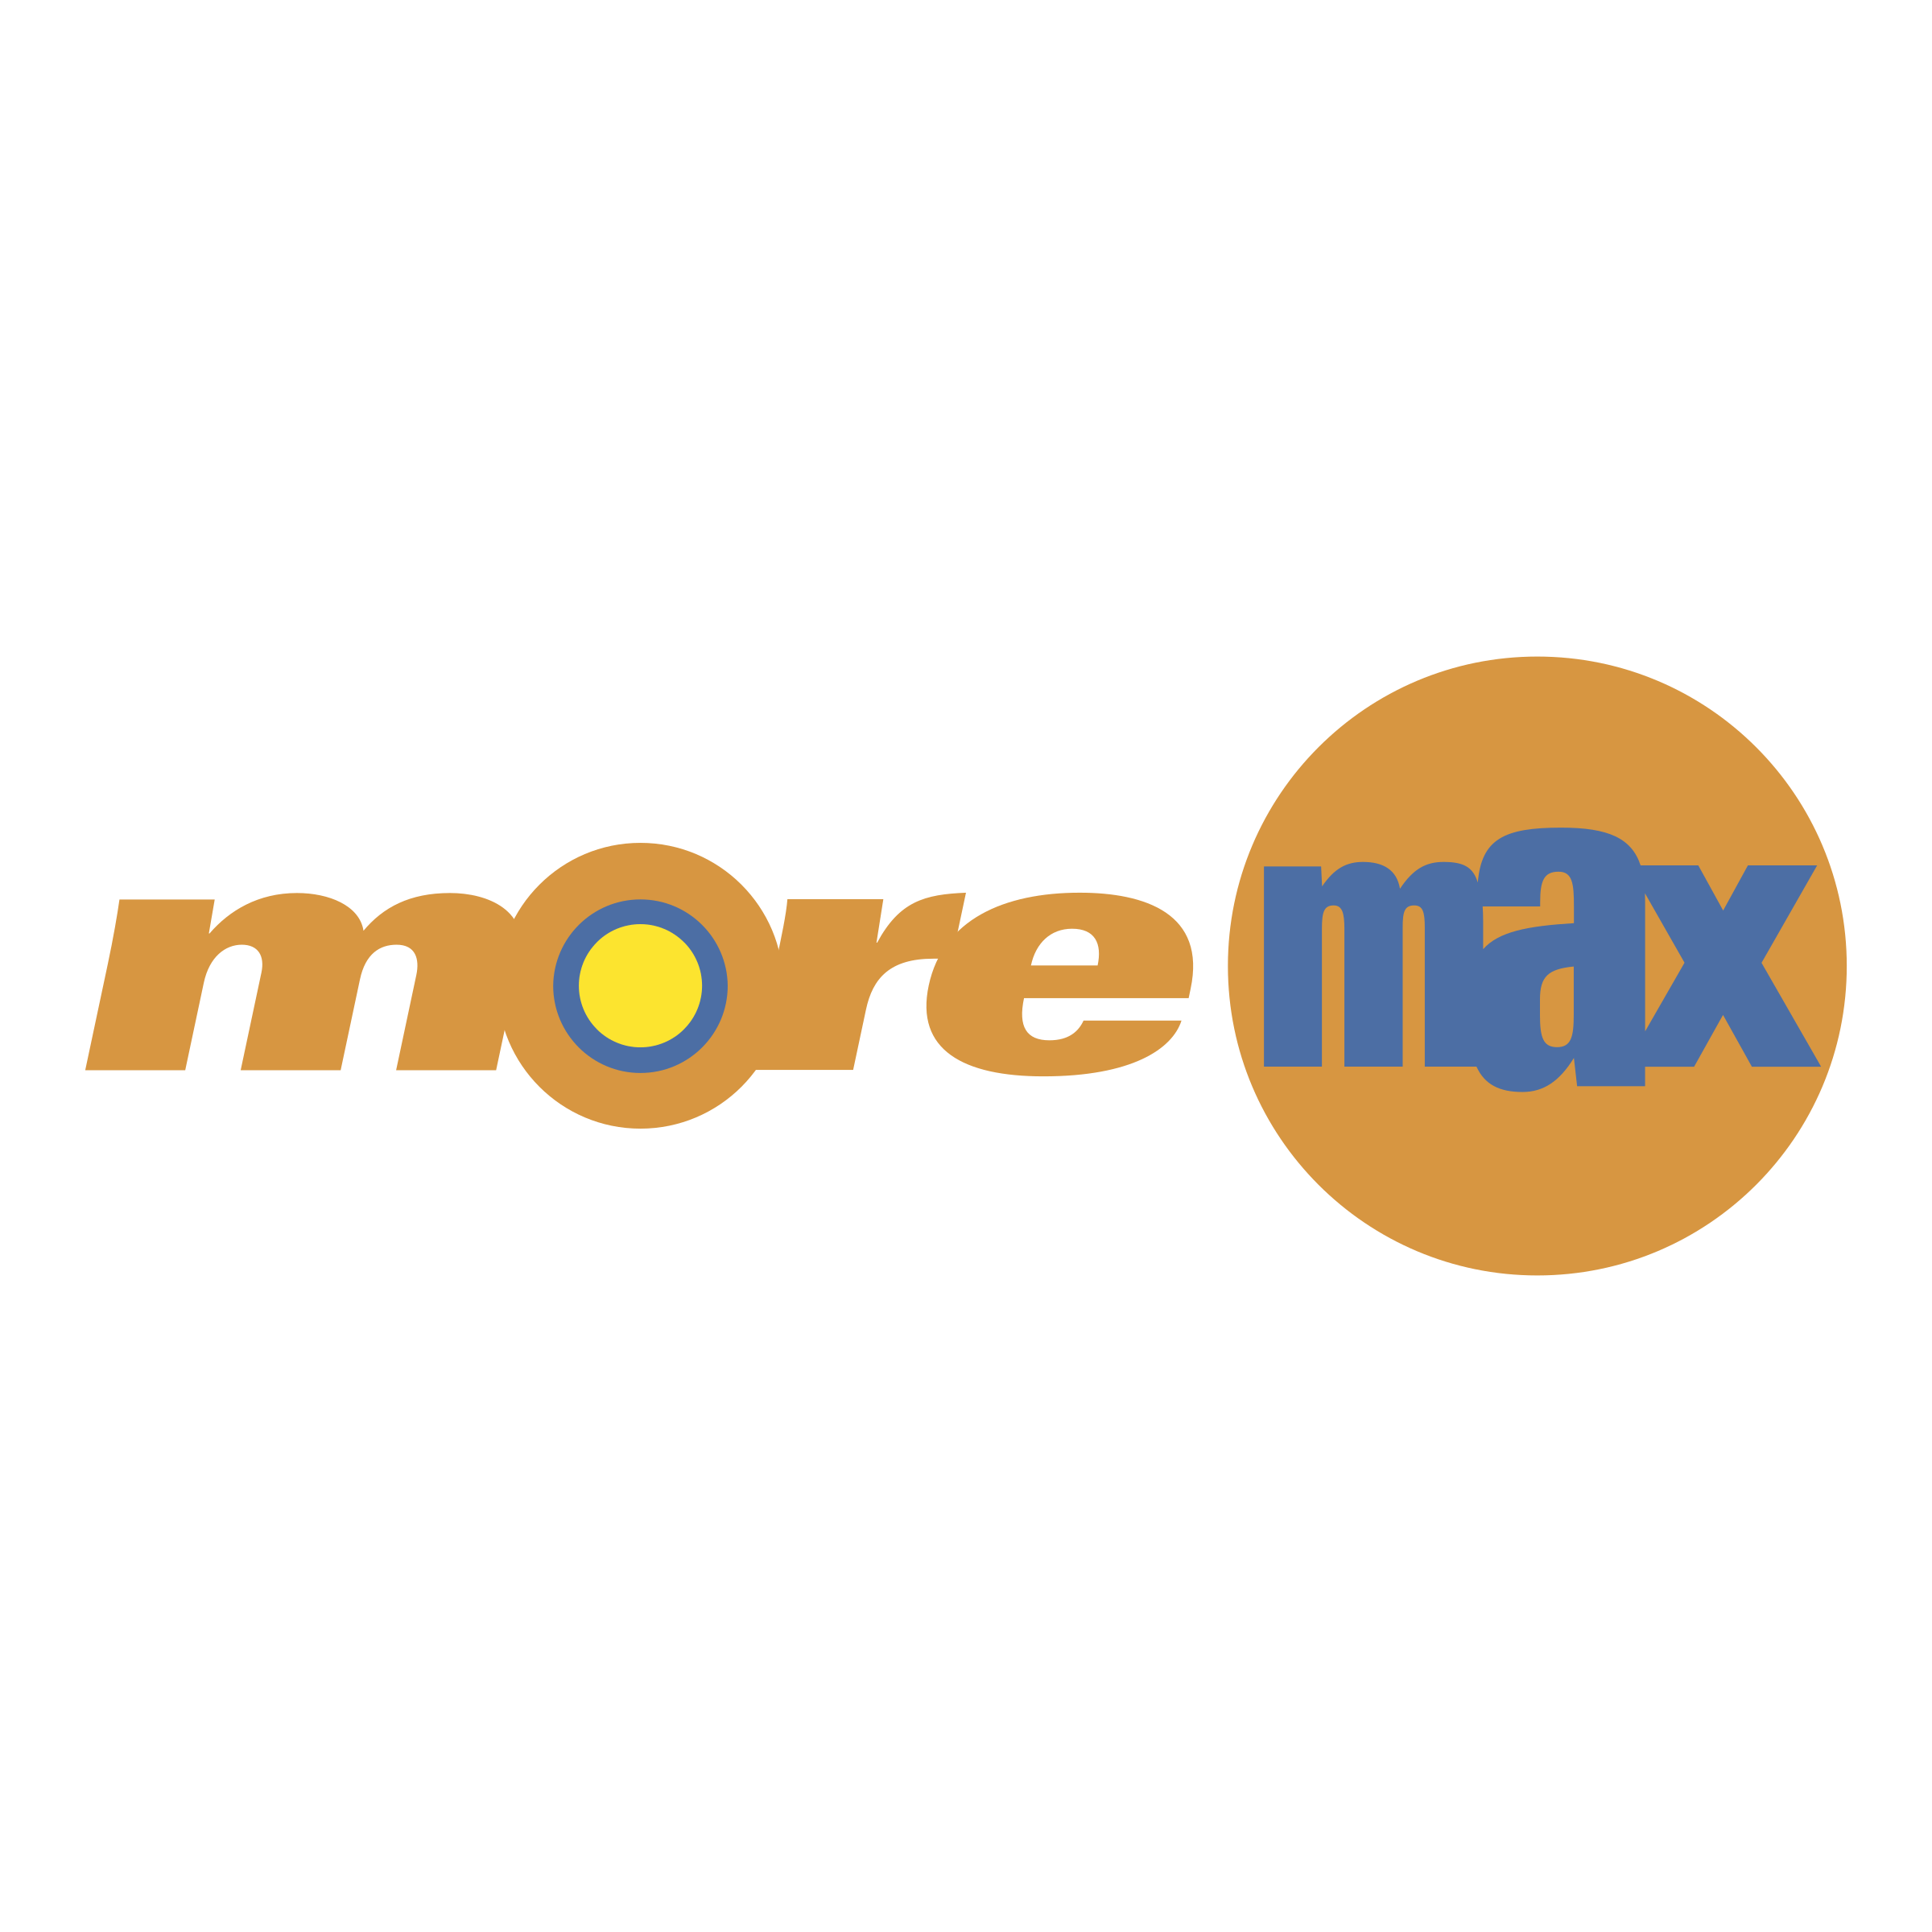 MoreMax Logo - More max Logo PNG Transparent & SVG Vector - Freebie Supply